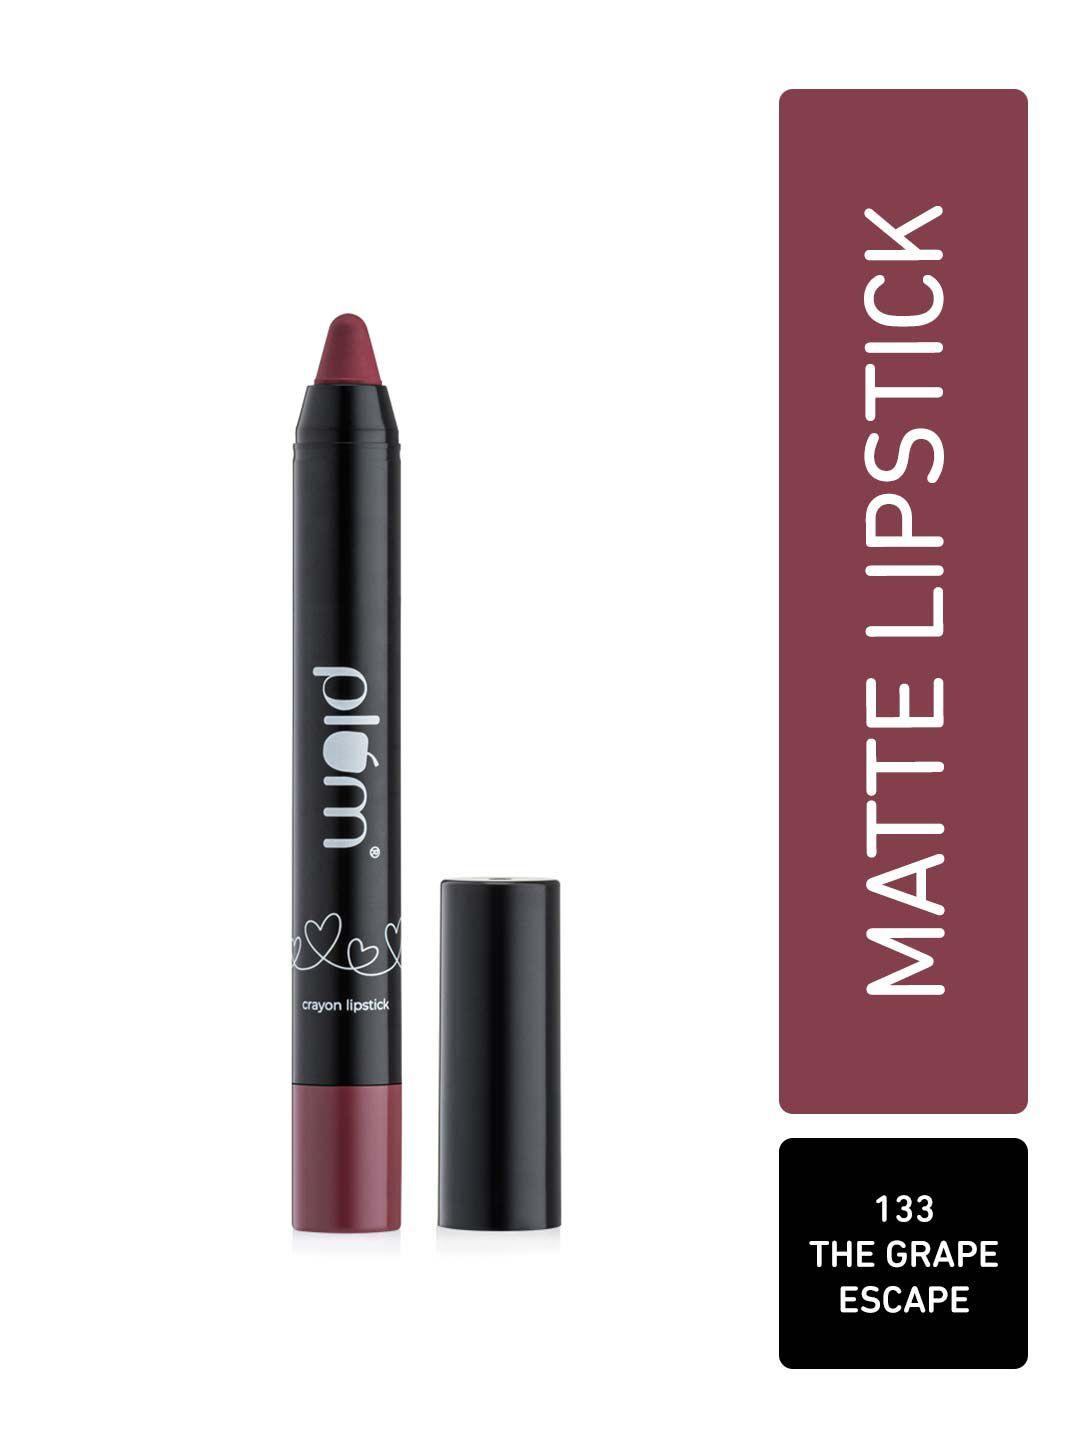 plum twist & go airbrushed finish matte crayon lipstick - 1.8g - the grape escape 133